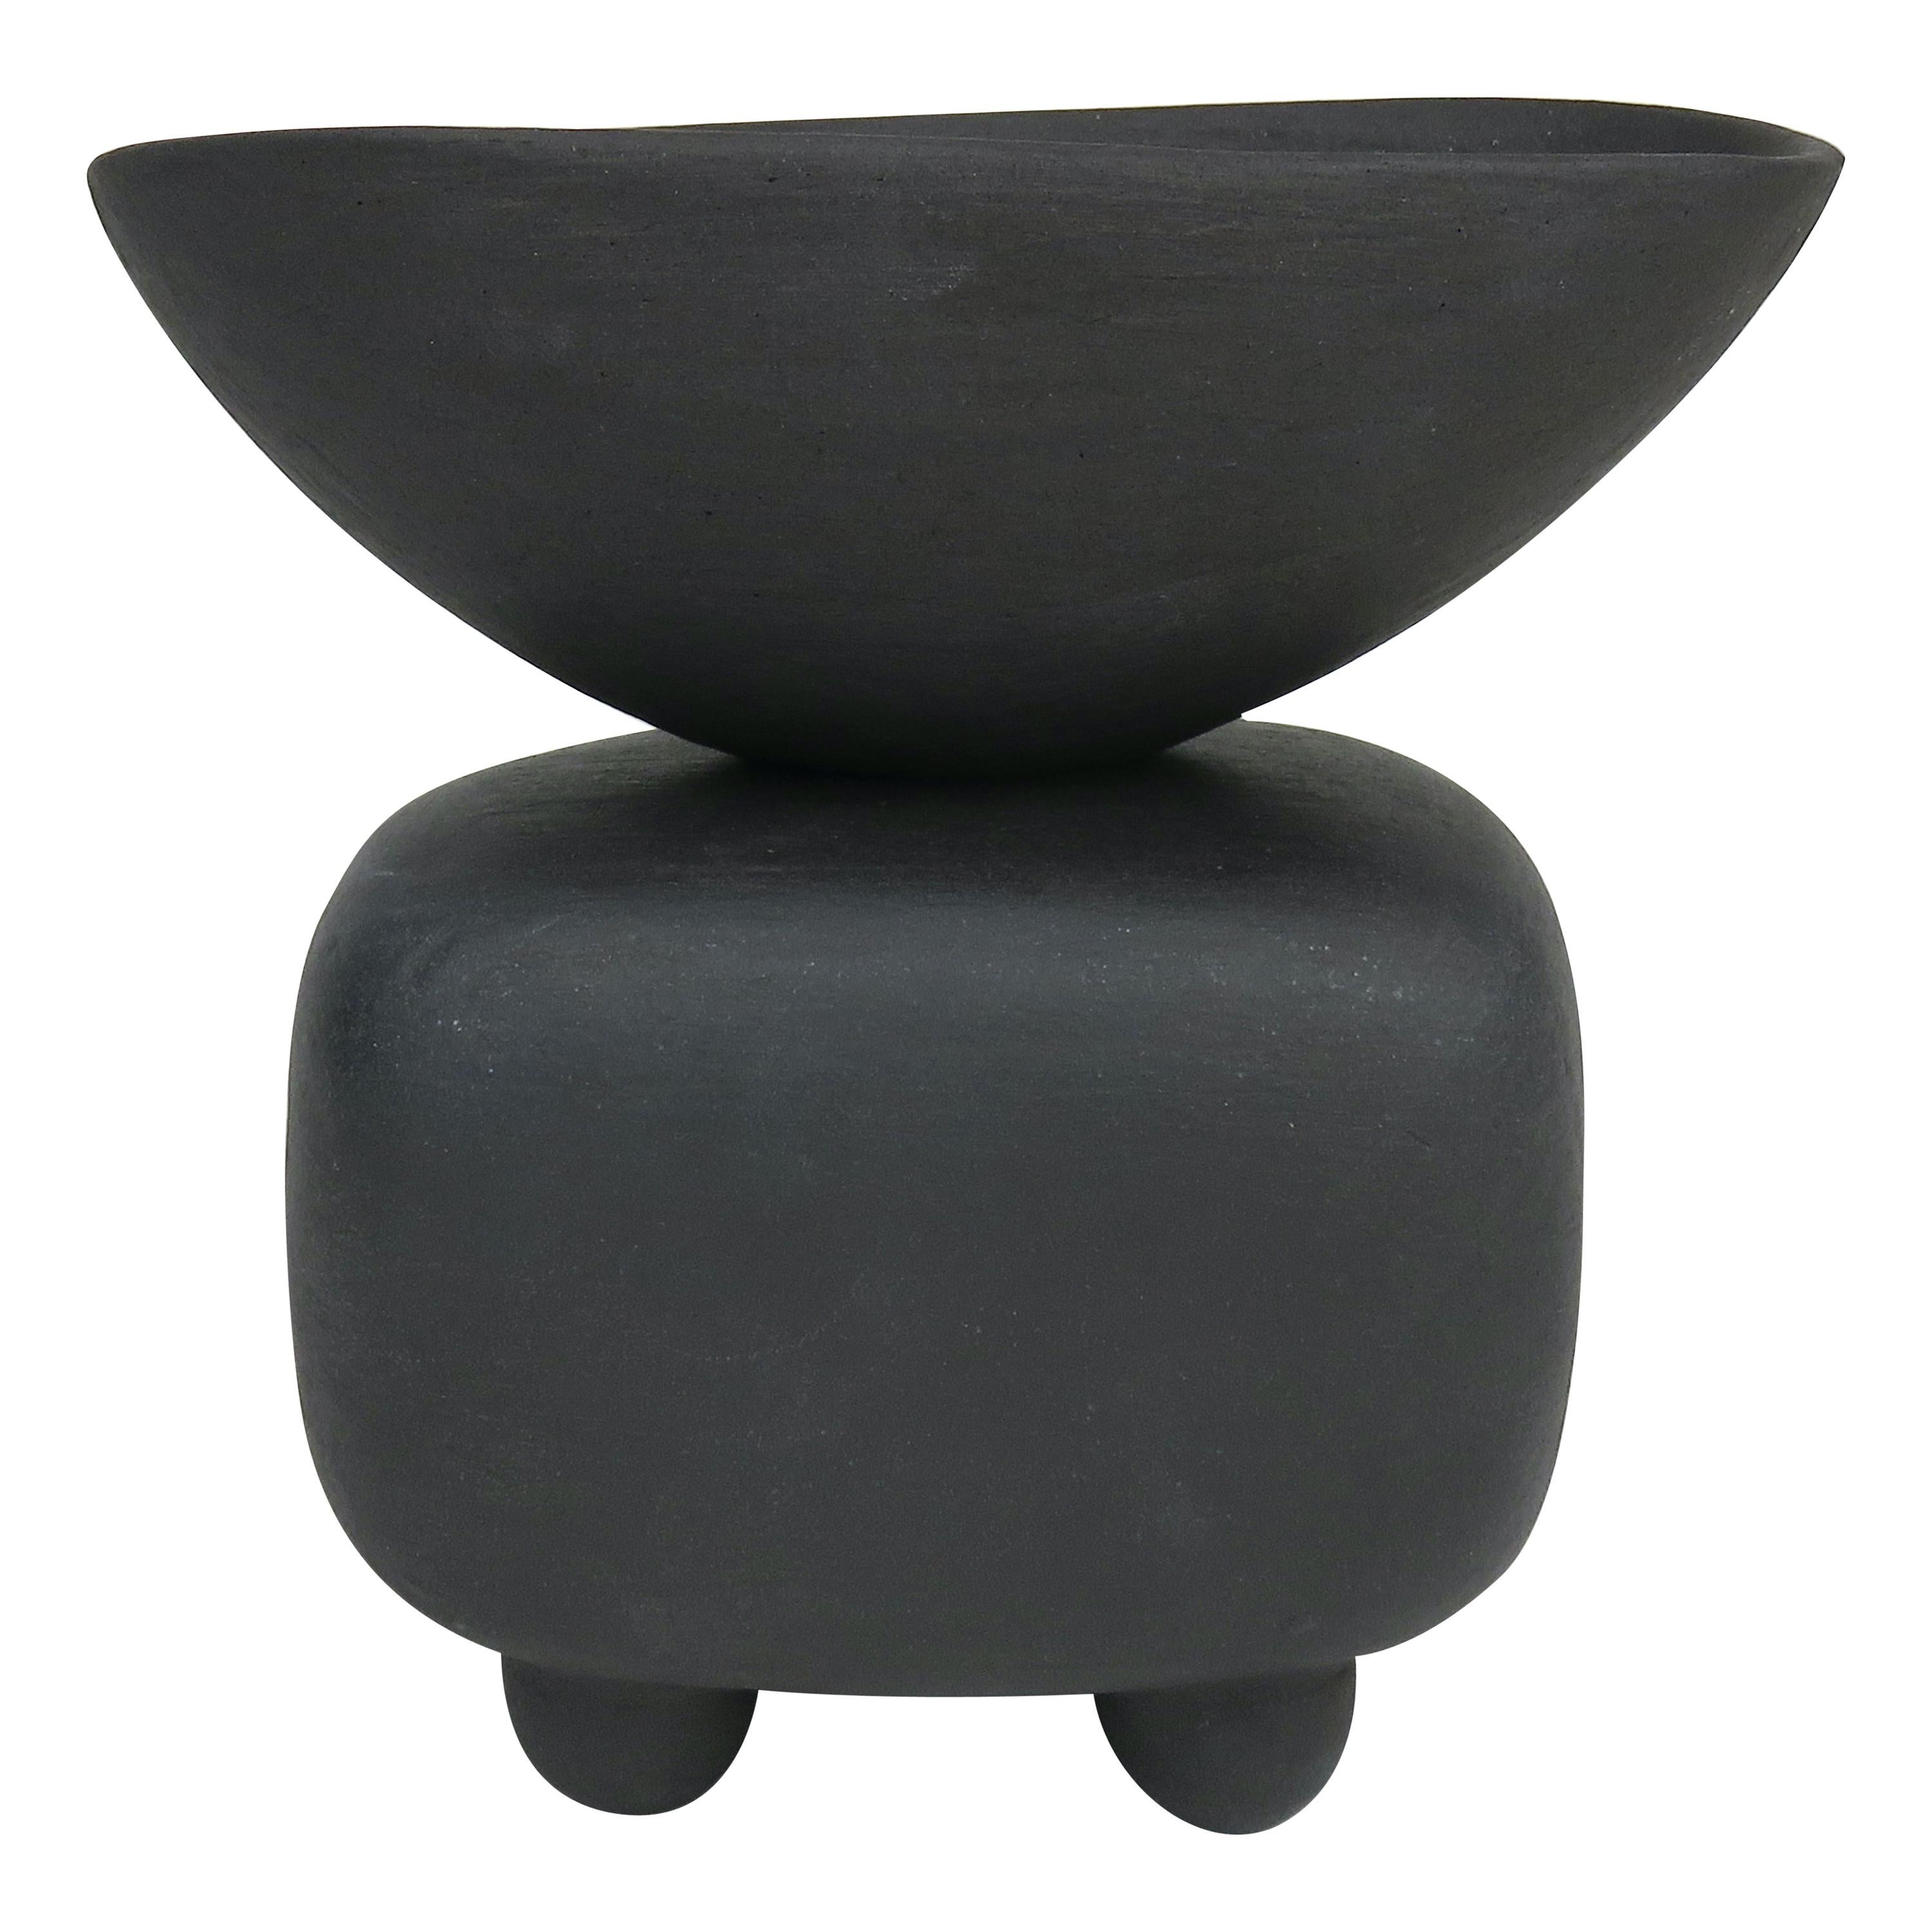 Small Matte Black Ceramic TOTEM, Soft Rectangular Form w/ Bowl Top, Ball Feet